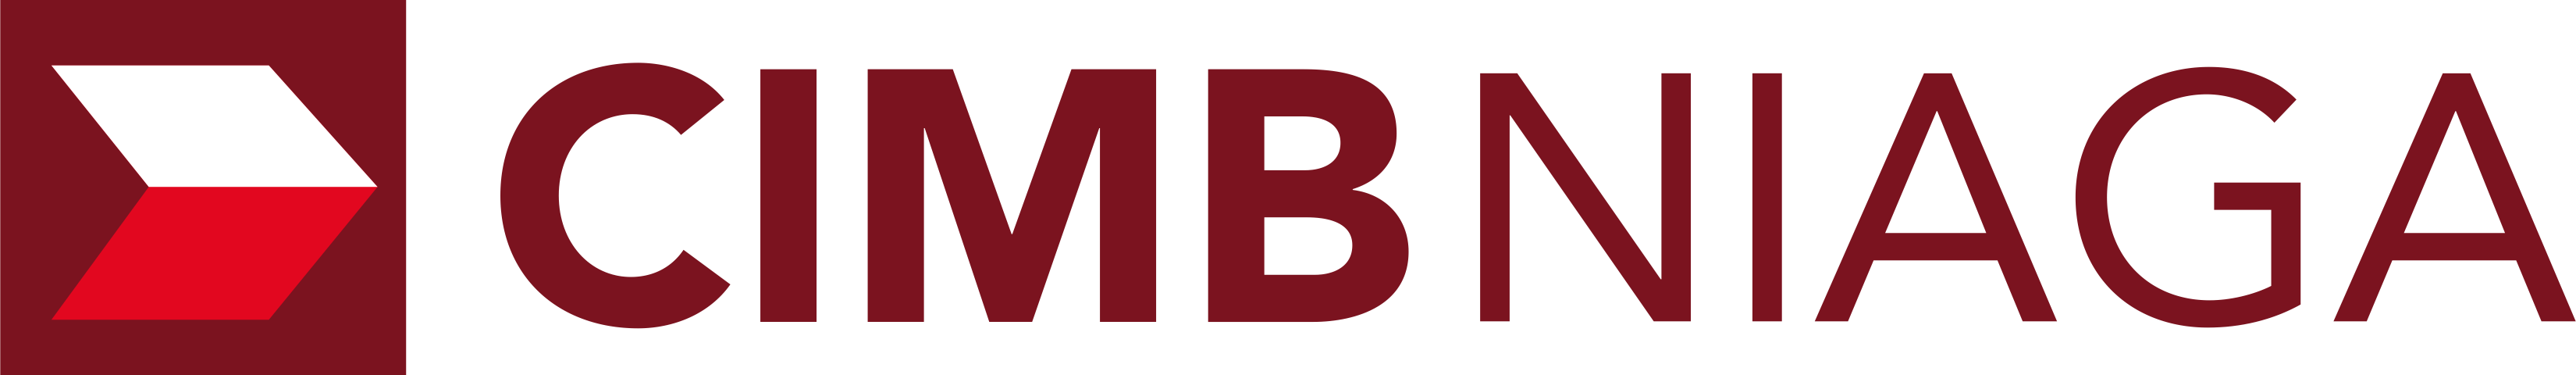 BVR Property Partner - Cimb niaga